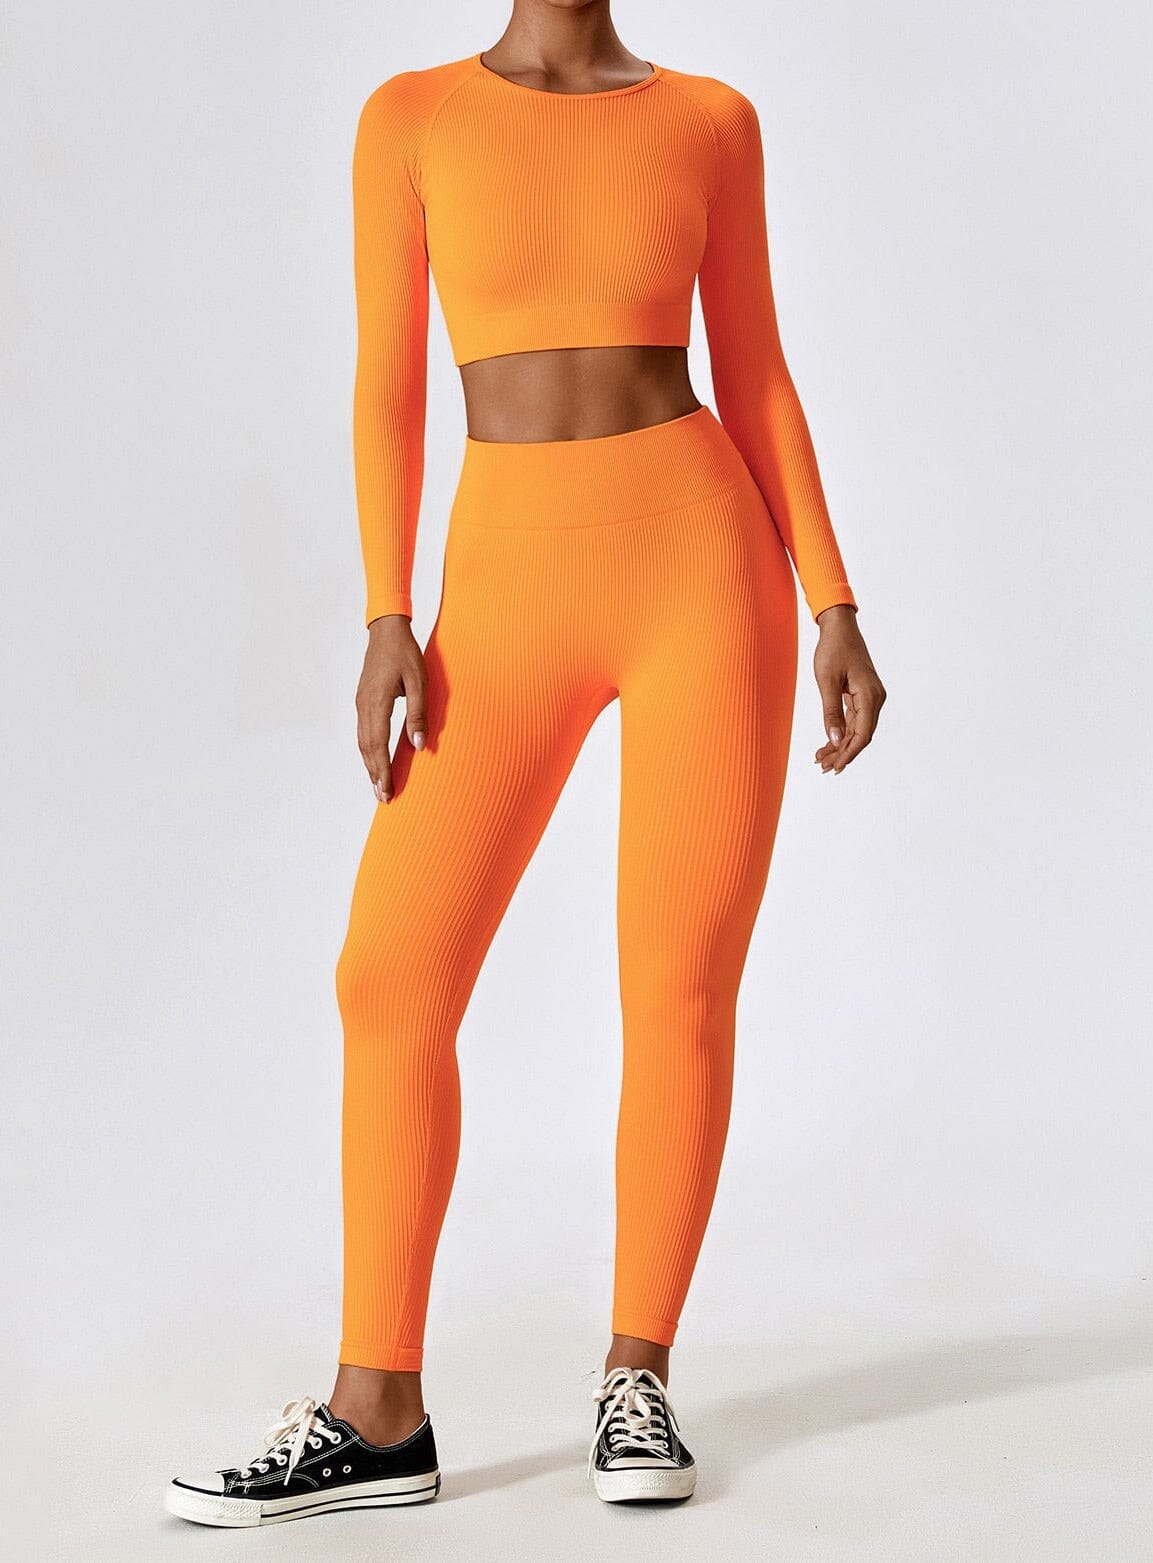 Grove Seamless Shirt Set - Leggings + Top Sets Starlethics Orange S 